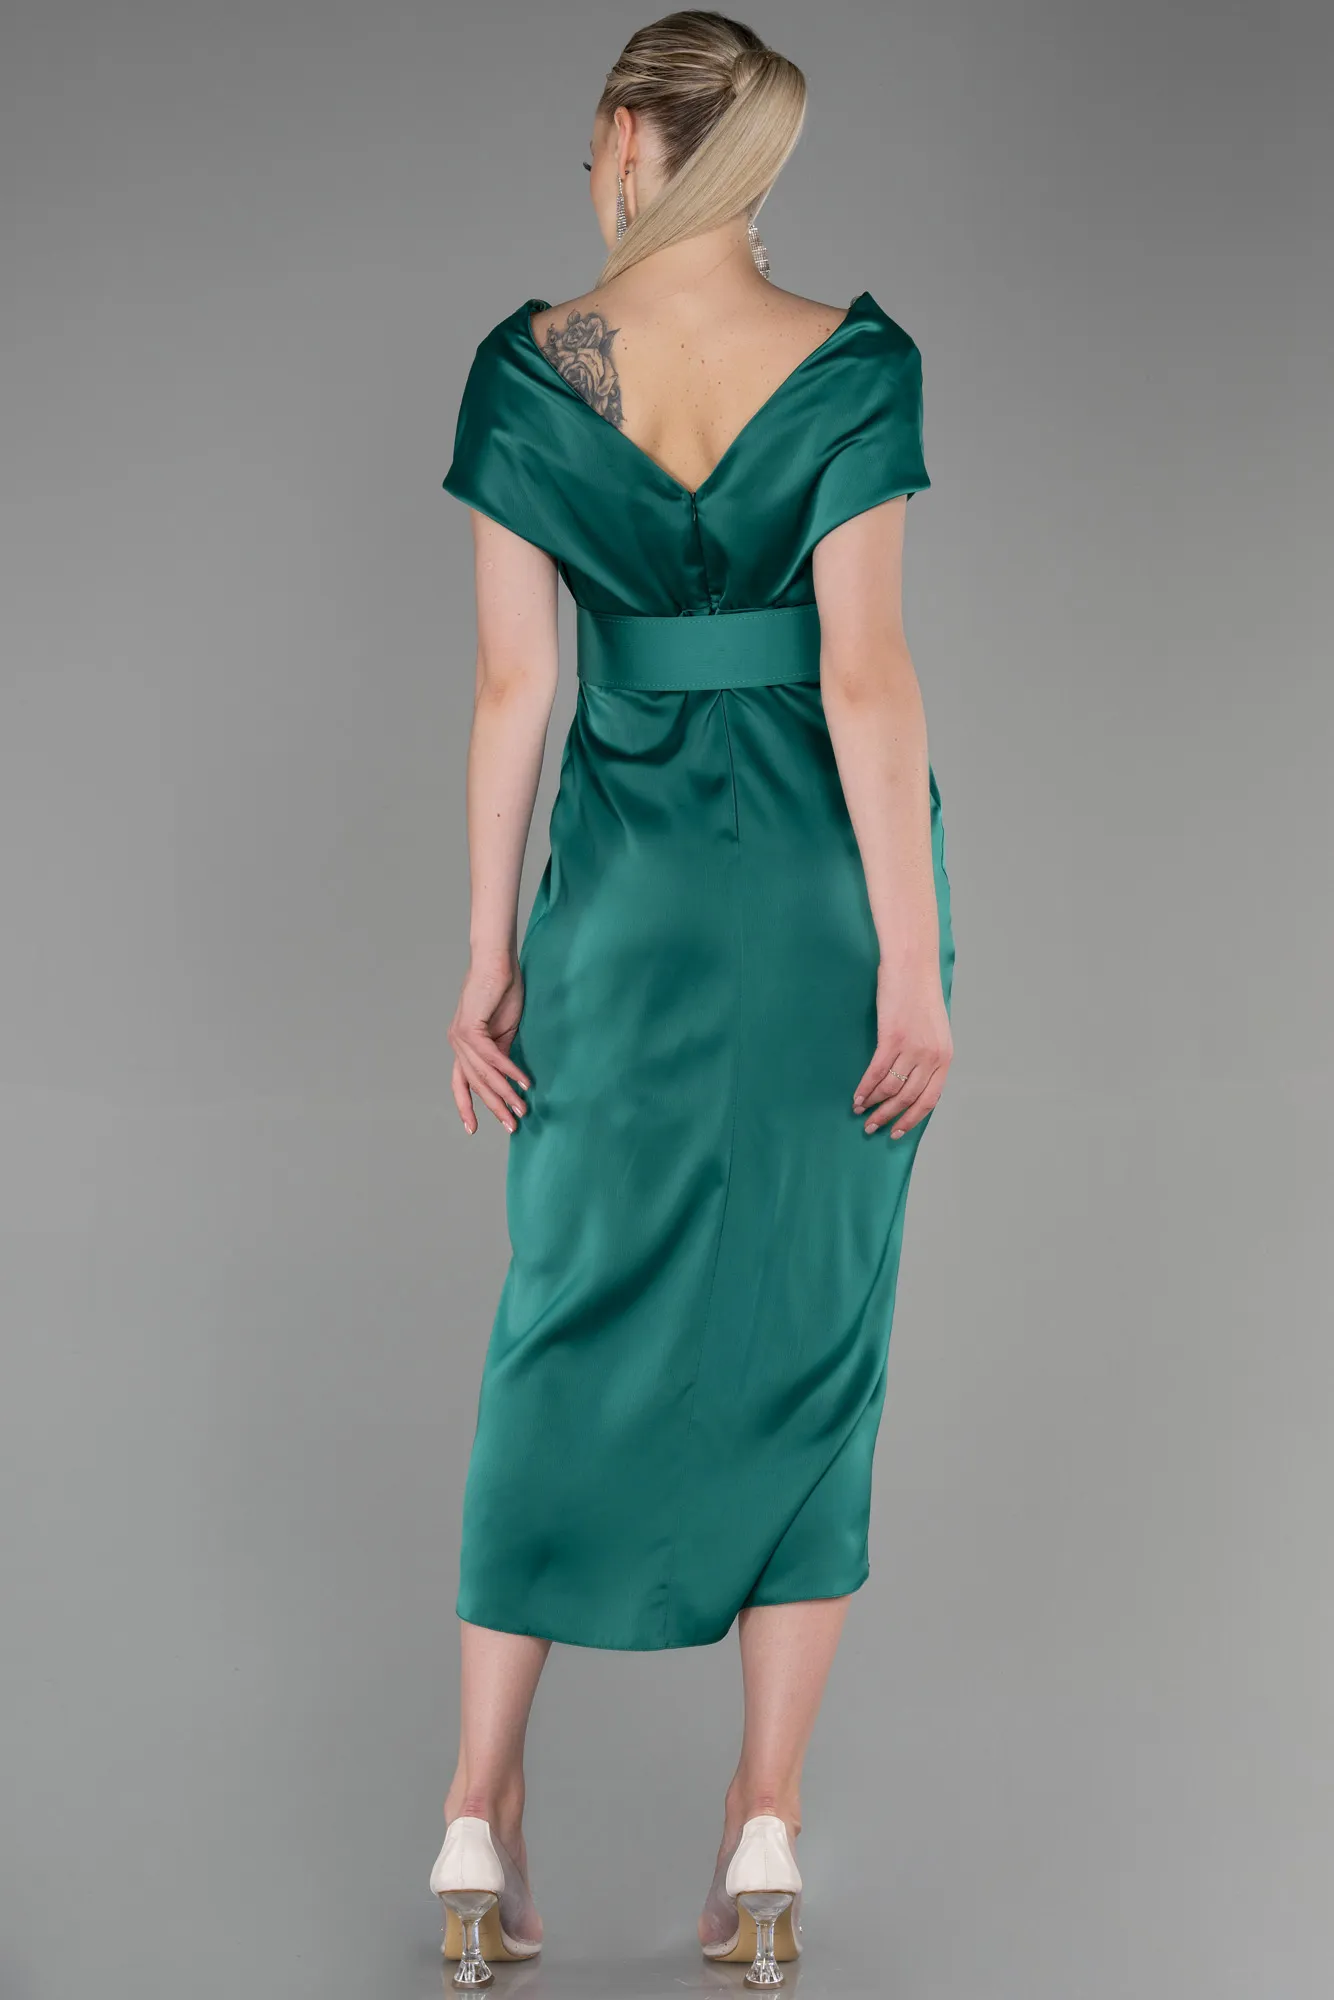 Green-Short Satin Invitation Dress ABK1107